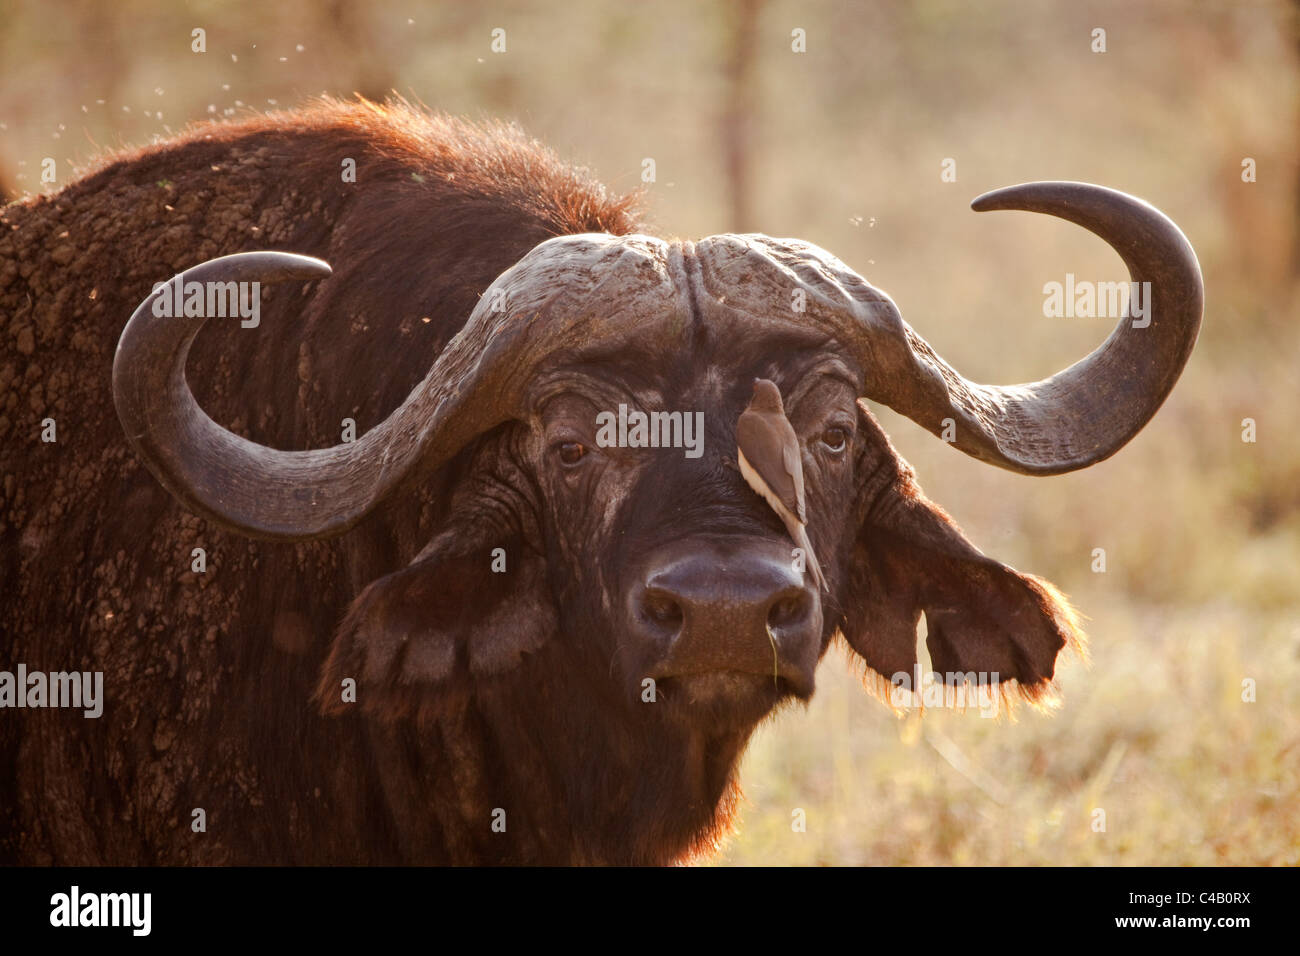 Tanzania, Serengeti. A craggy old buffalo, surrounded by flies. Stock Photo